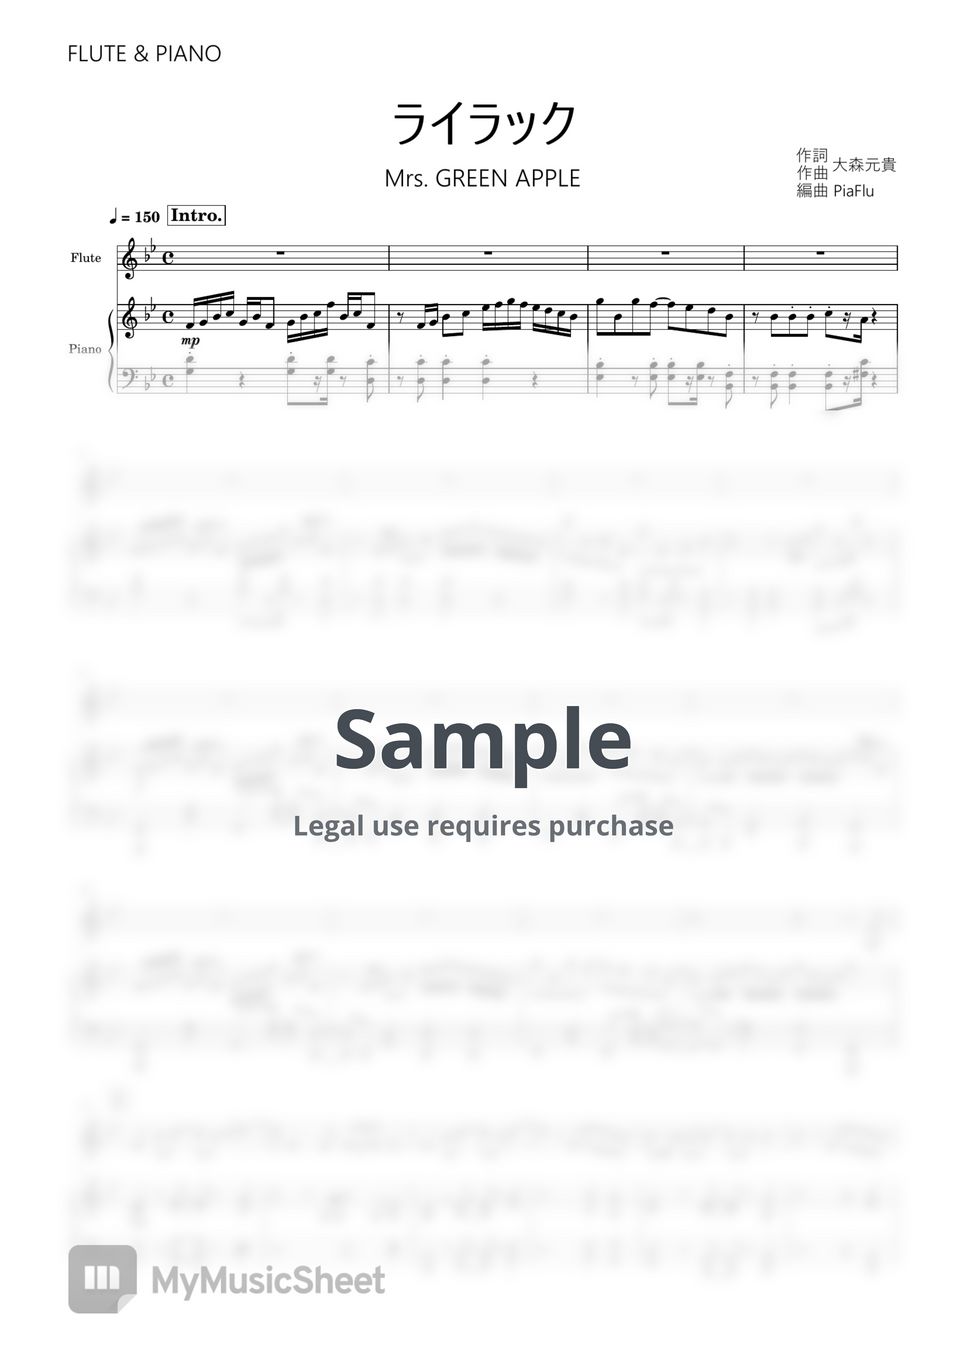 Mrs. GREEN APPLE - ライラック / Mrs. GREEN APPLE - Lilac (Flute&Piano) by PiaFlu / ピアフル Piano&Flute